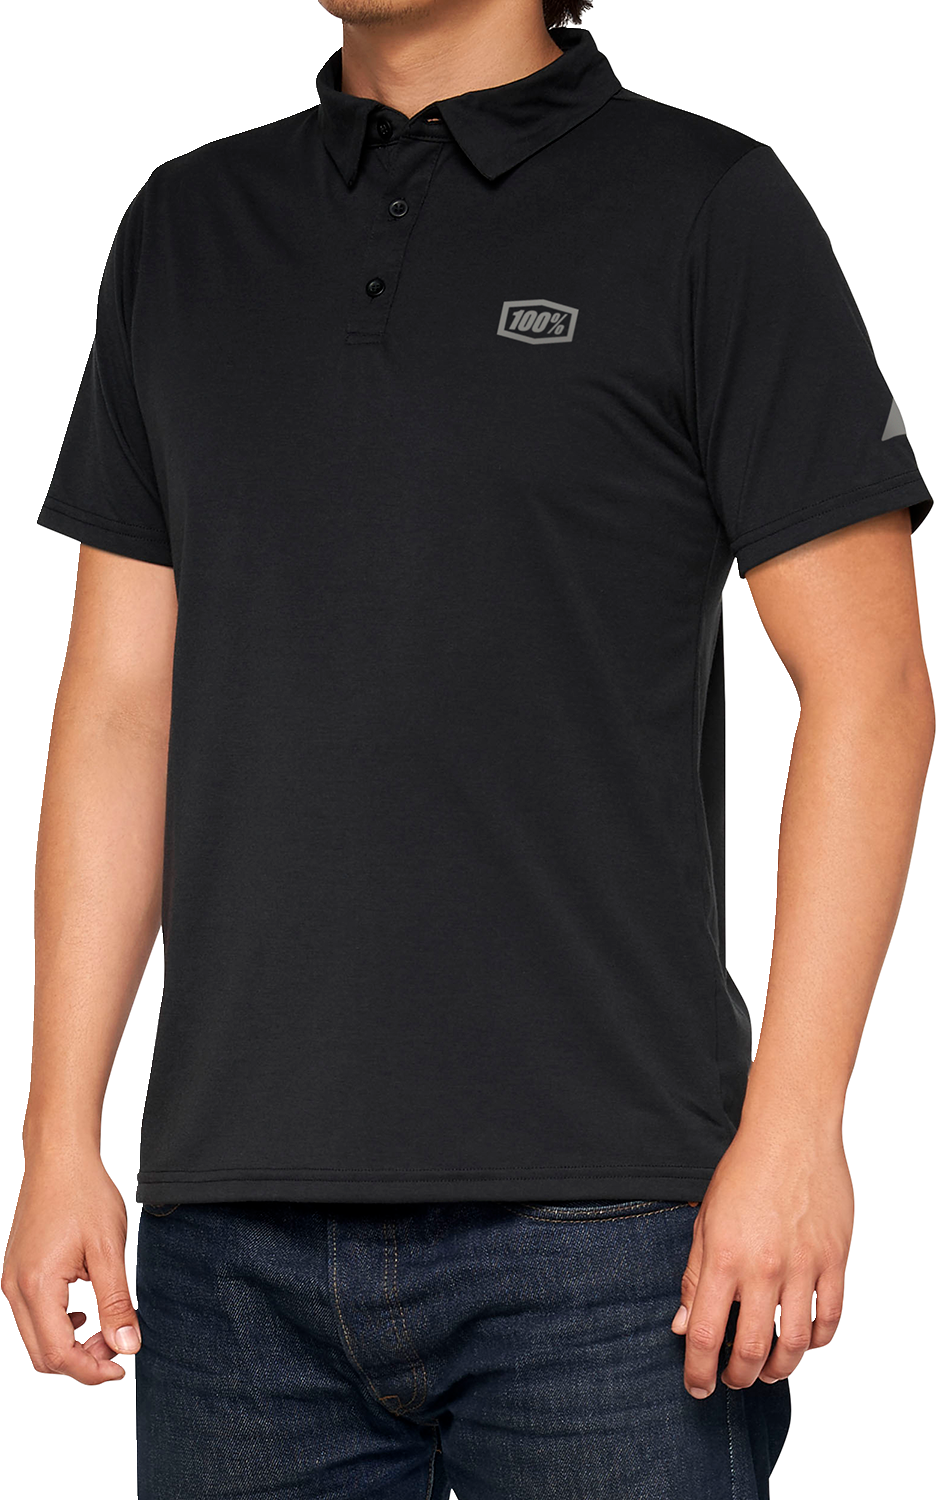 100% Corpo Polo Shirt - Black/Gray - Medium 35019-057-11